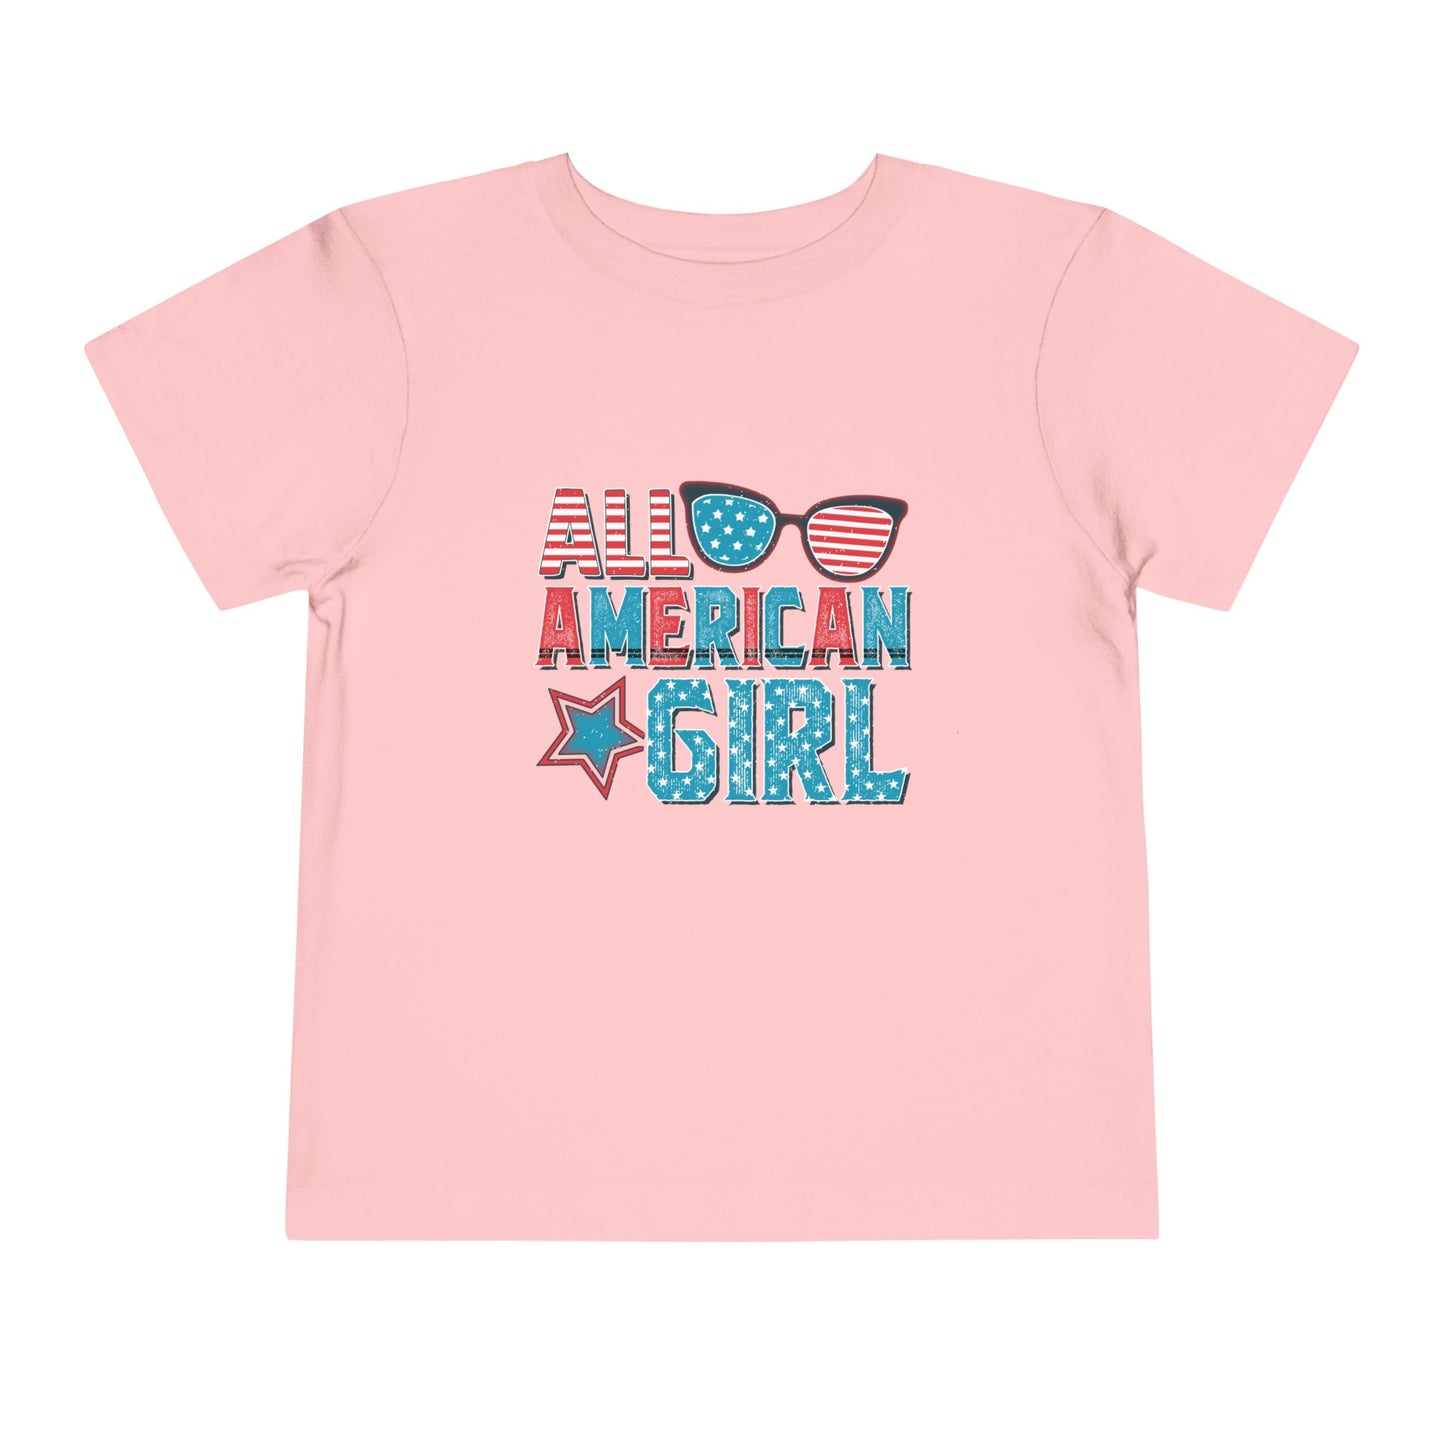 All American Toddler Girl's Short Sleeve Tee